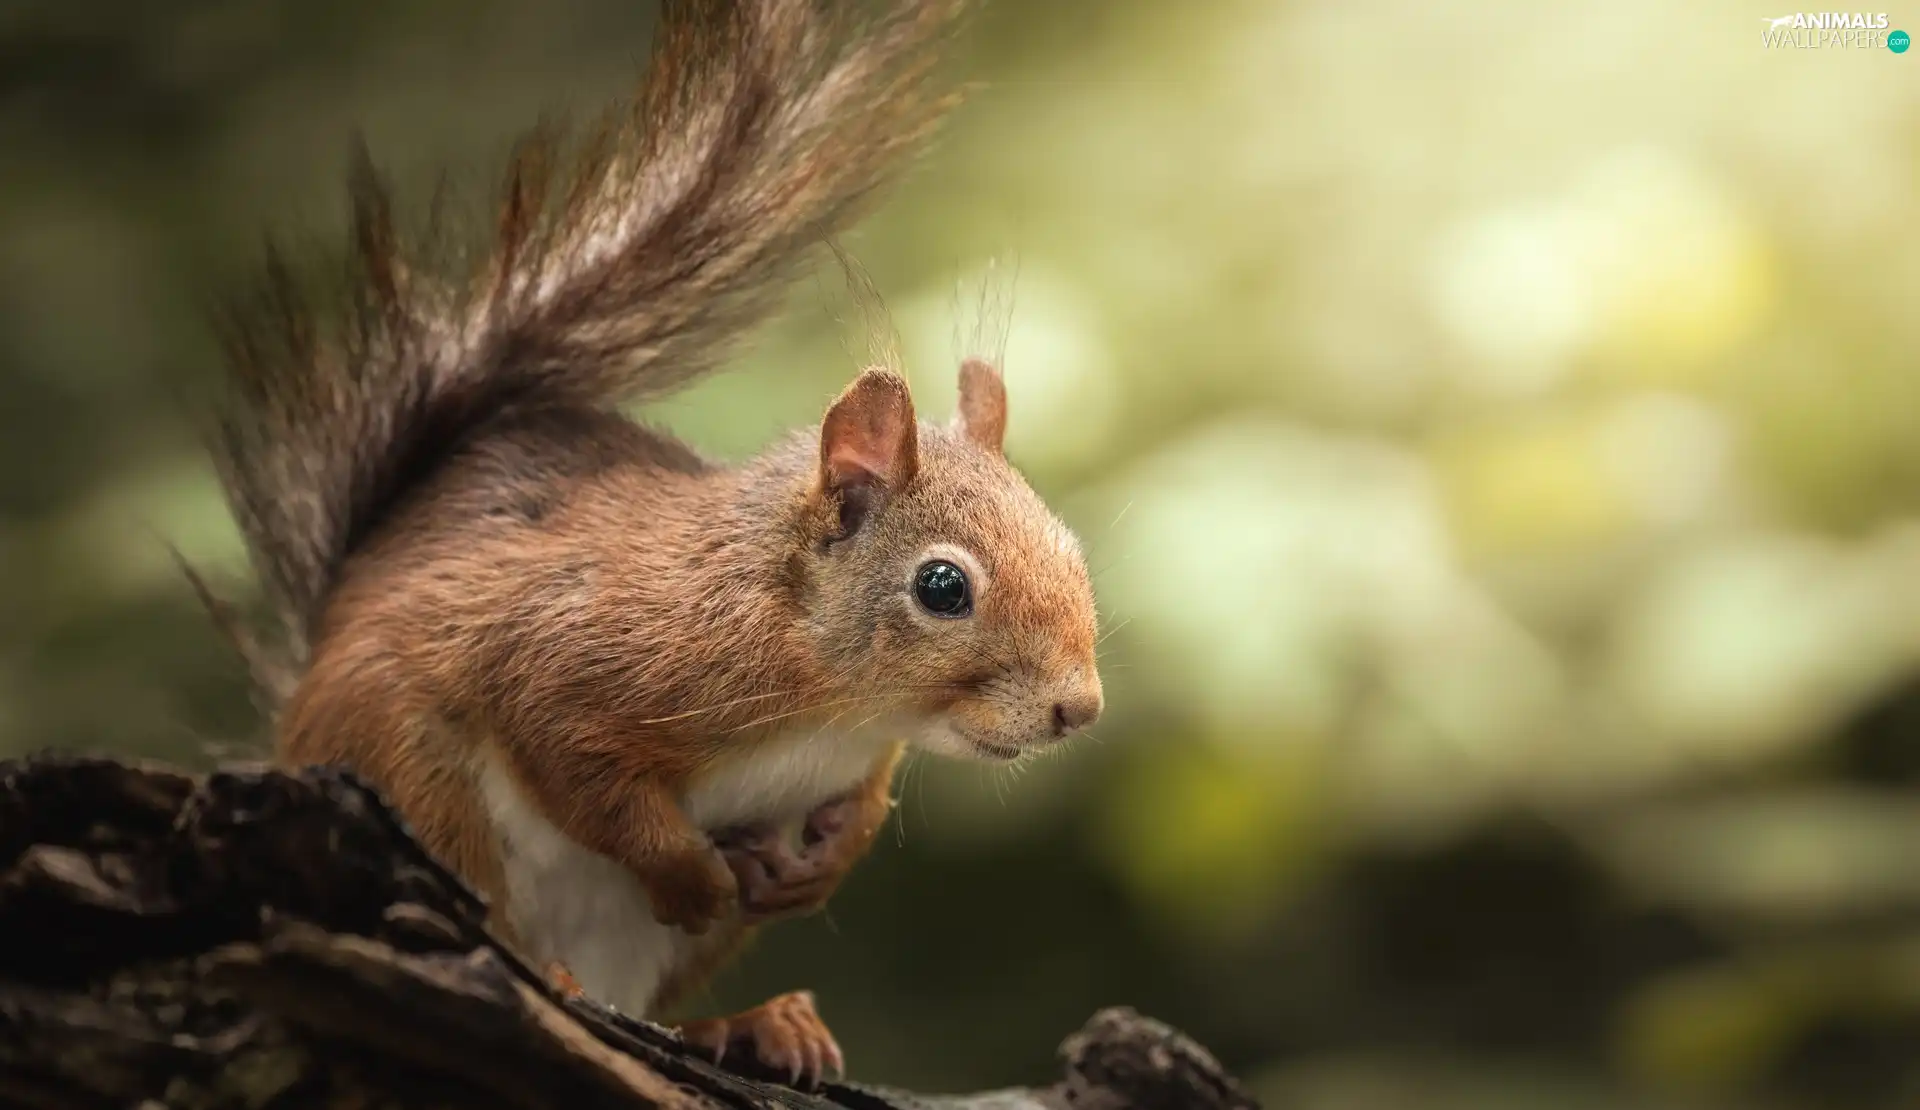 Ginger, trunk, blurry background, squirrel